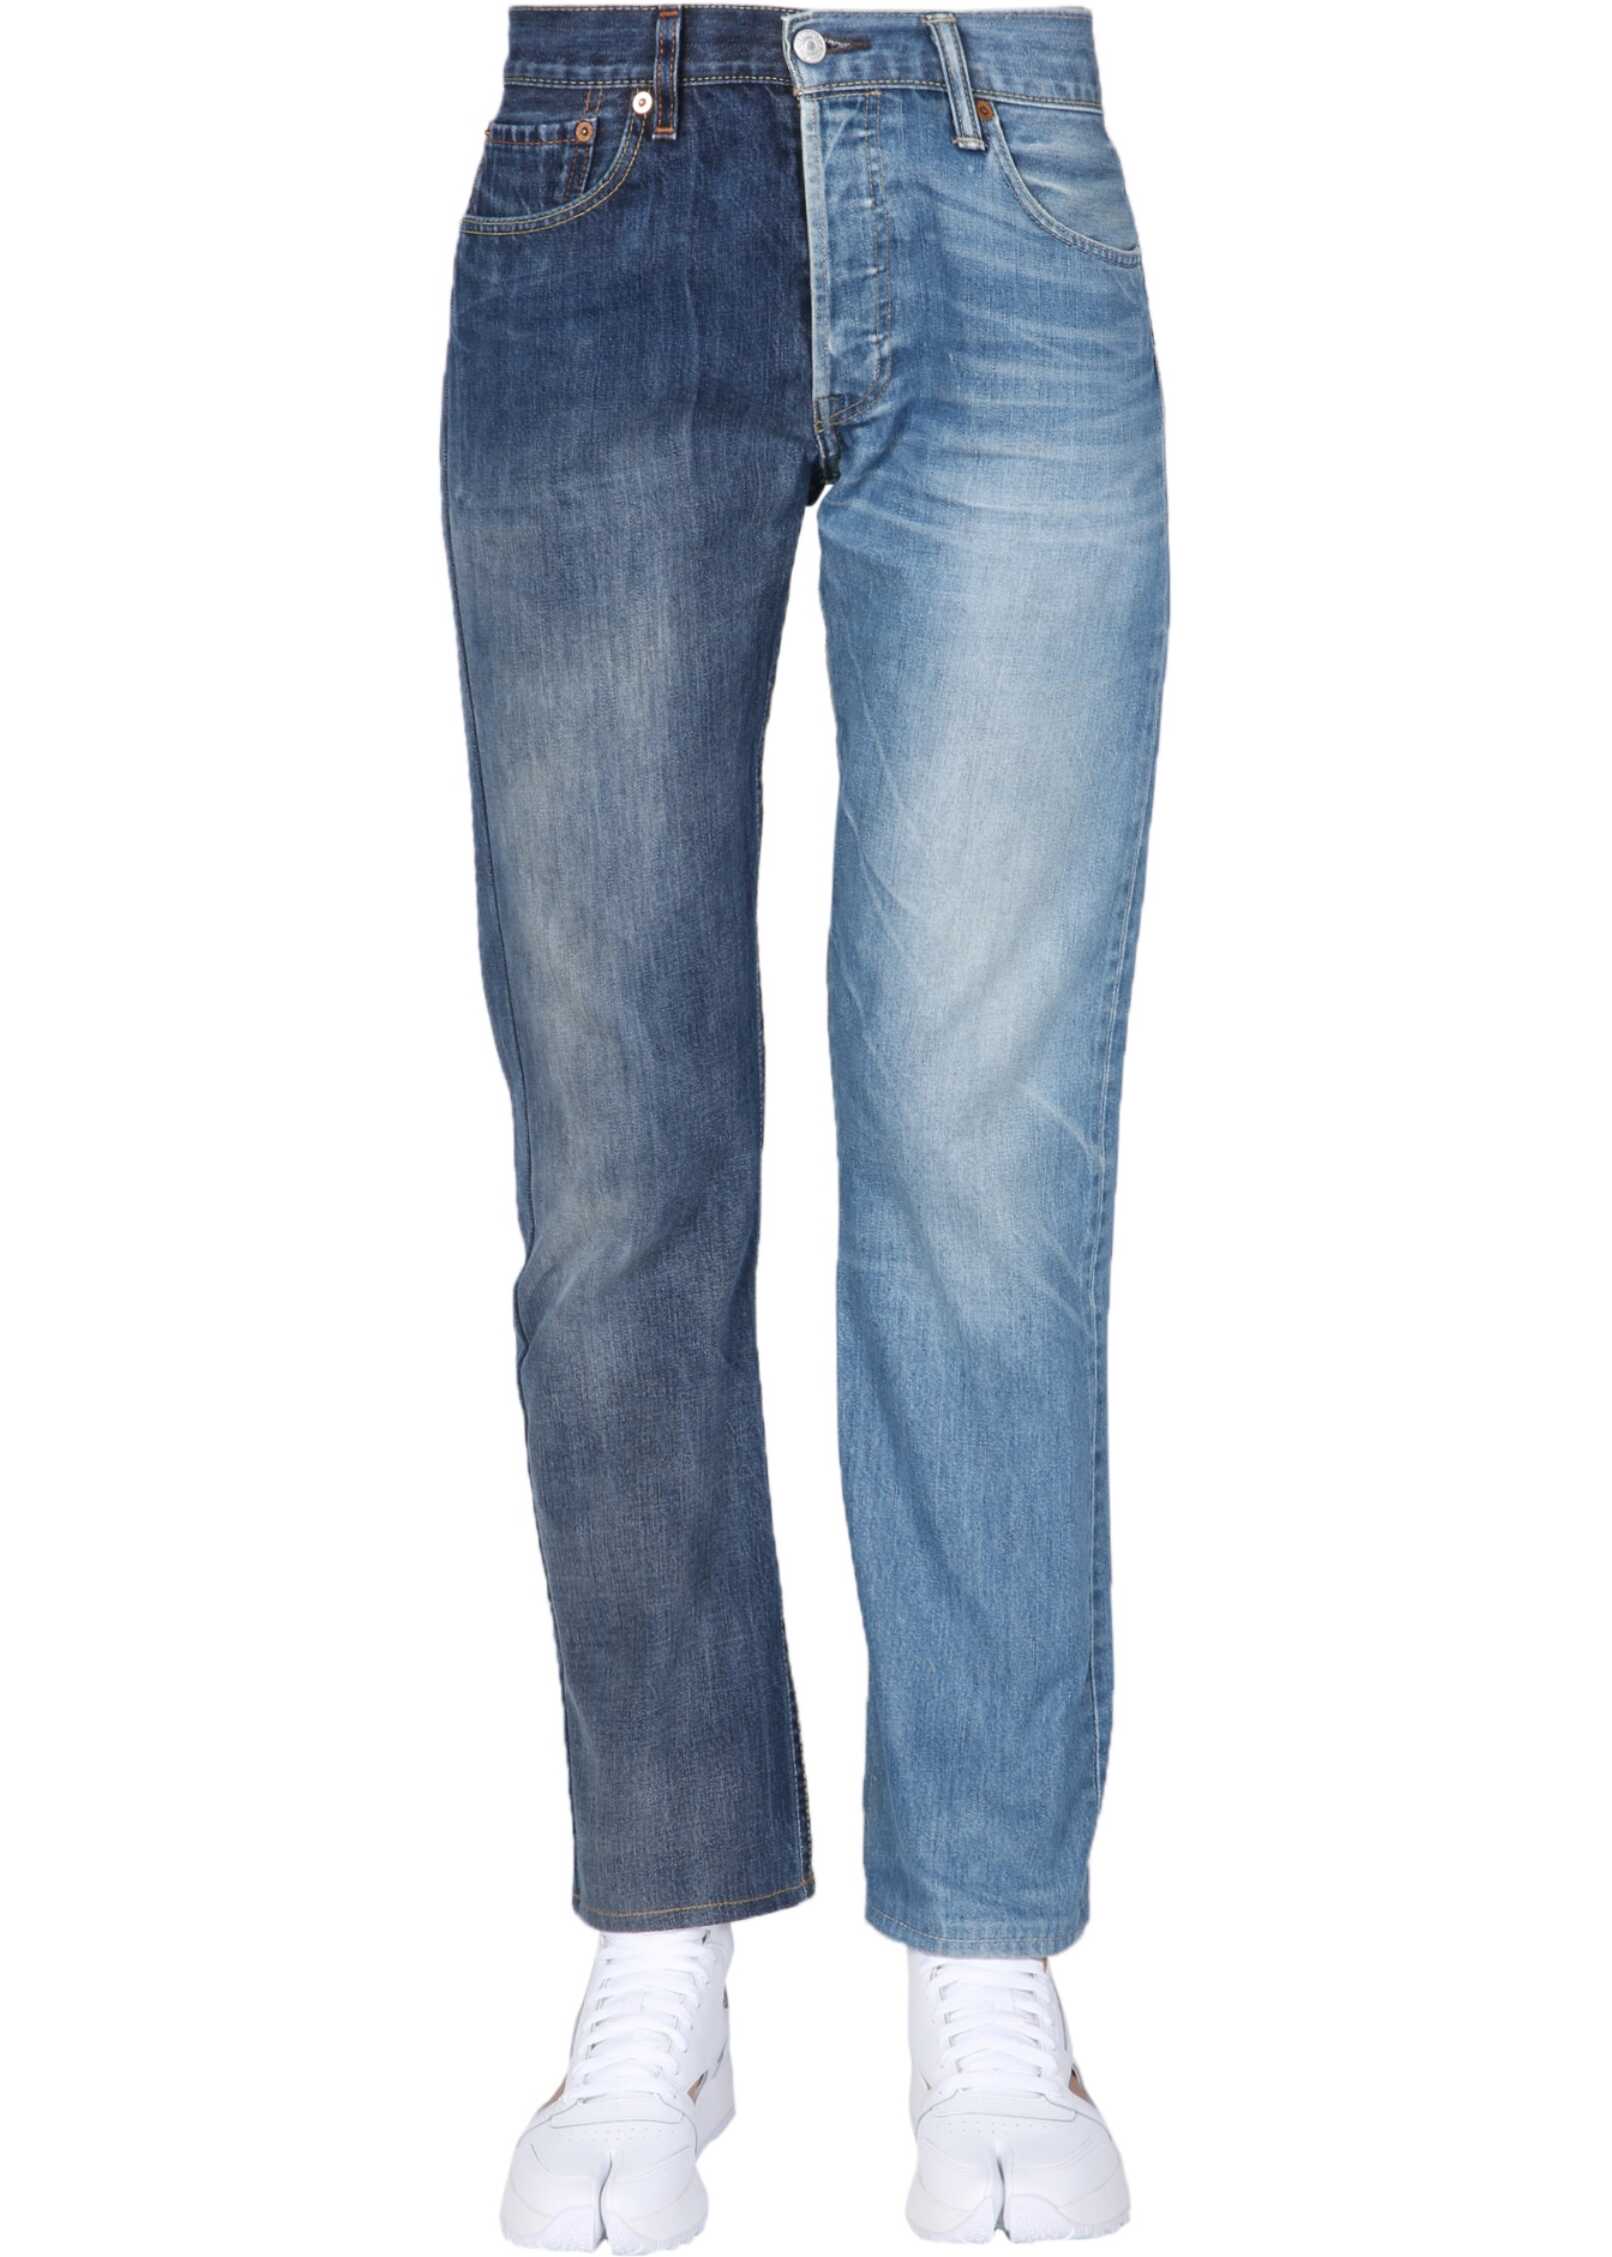 1/OFF 50/50 Jeans MULTICOLOUR